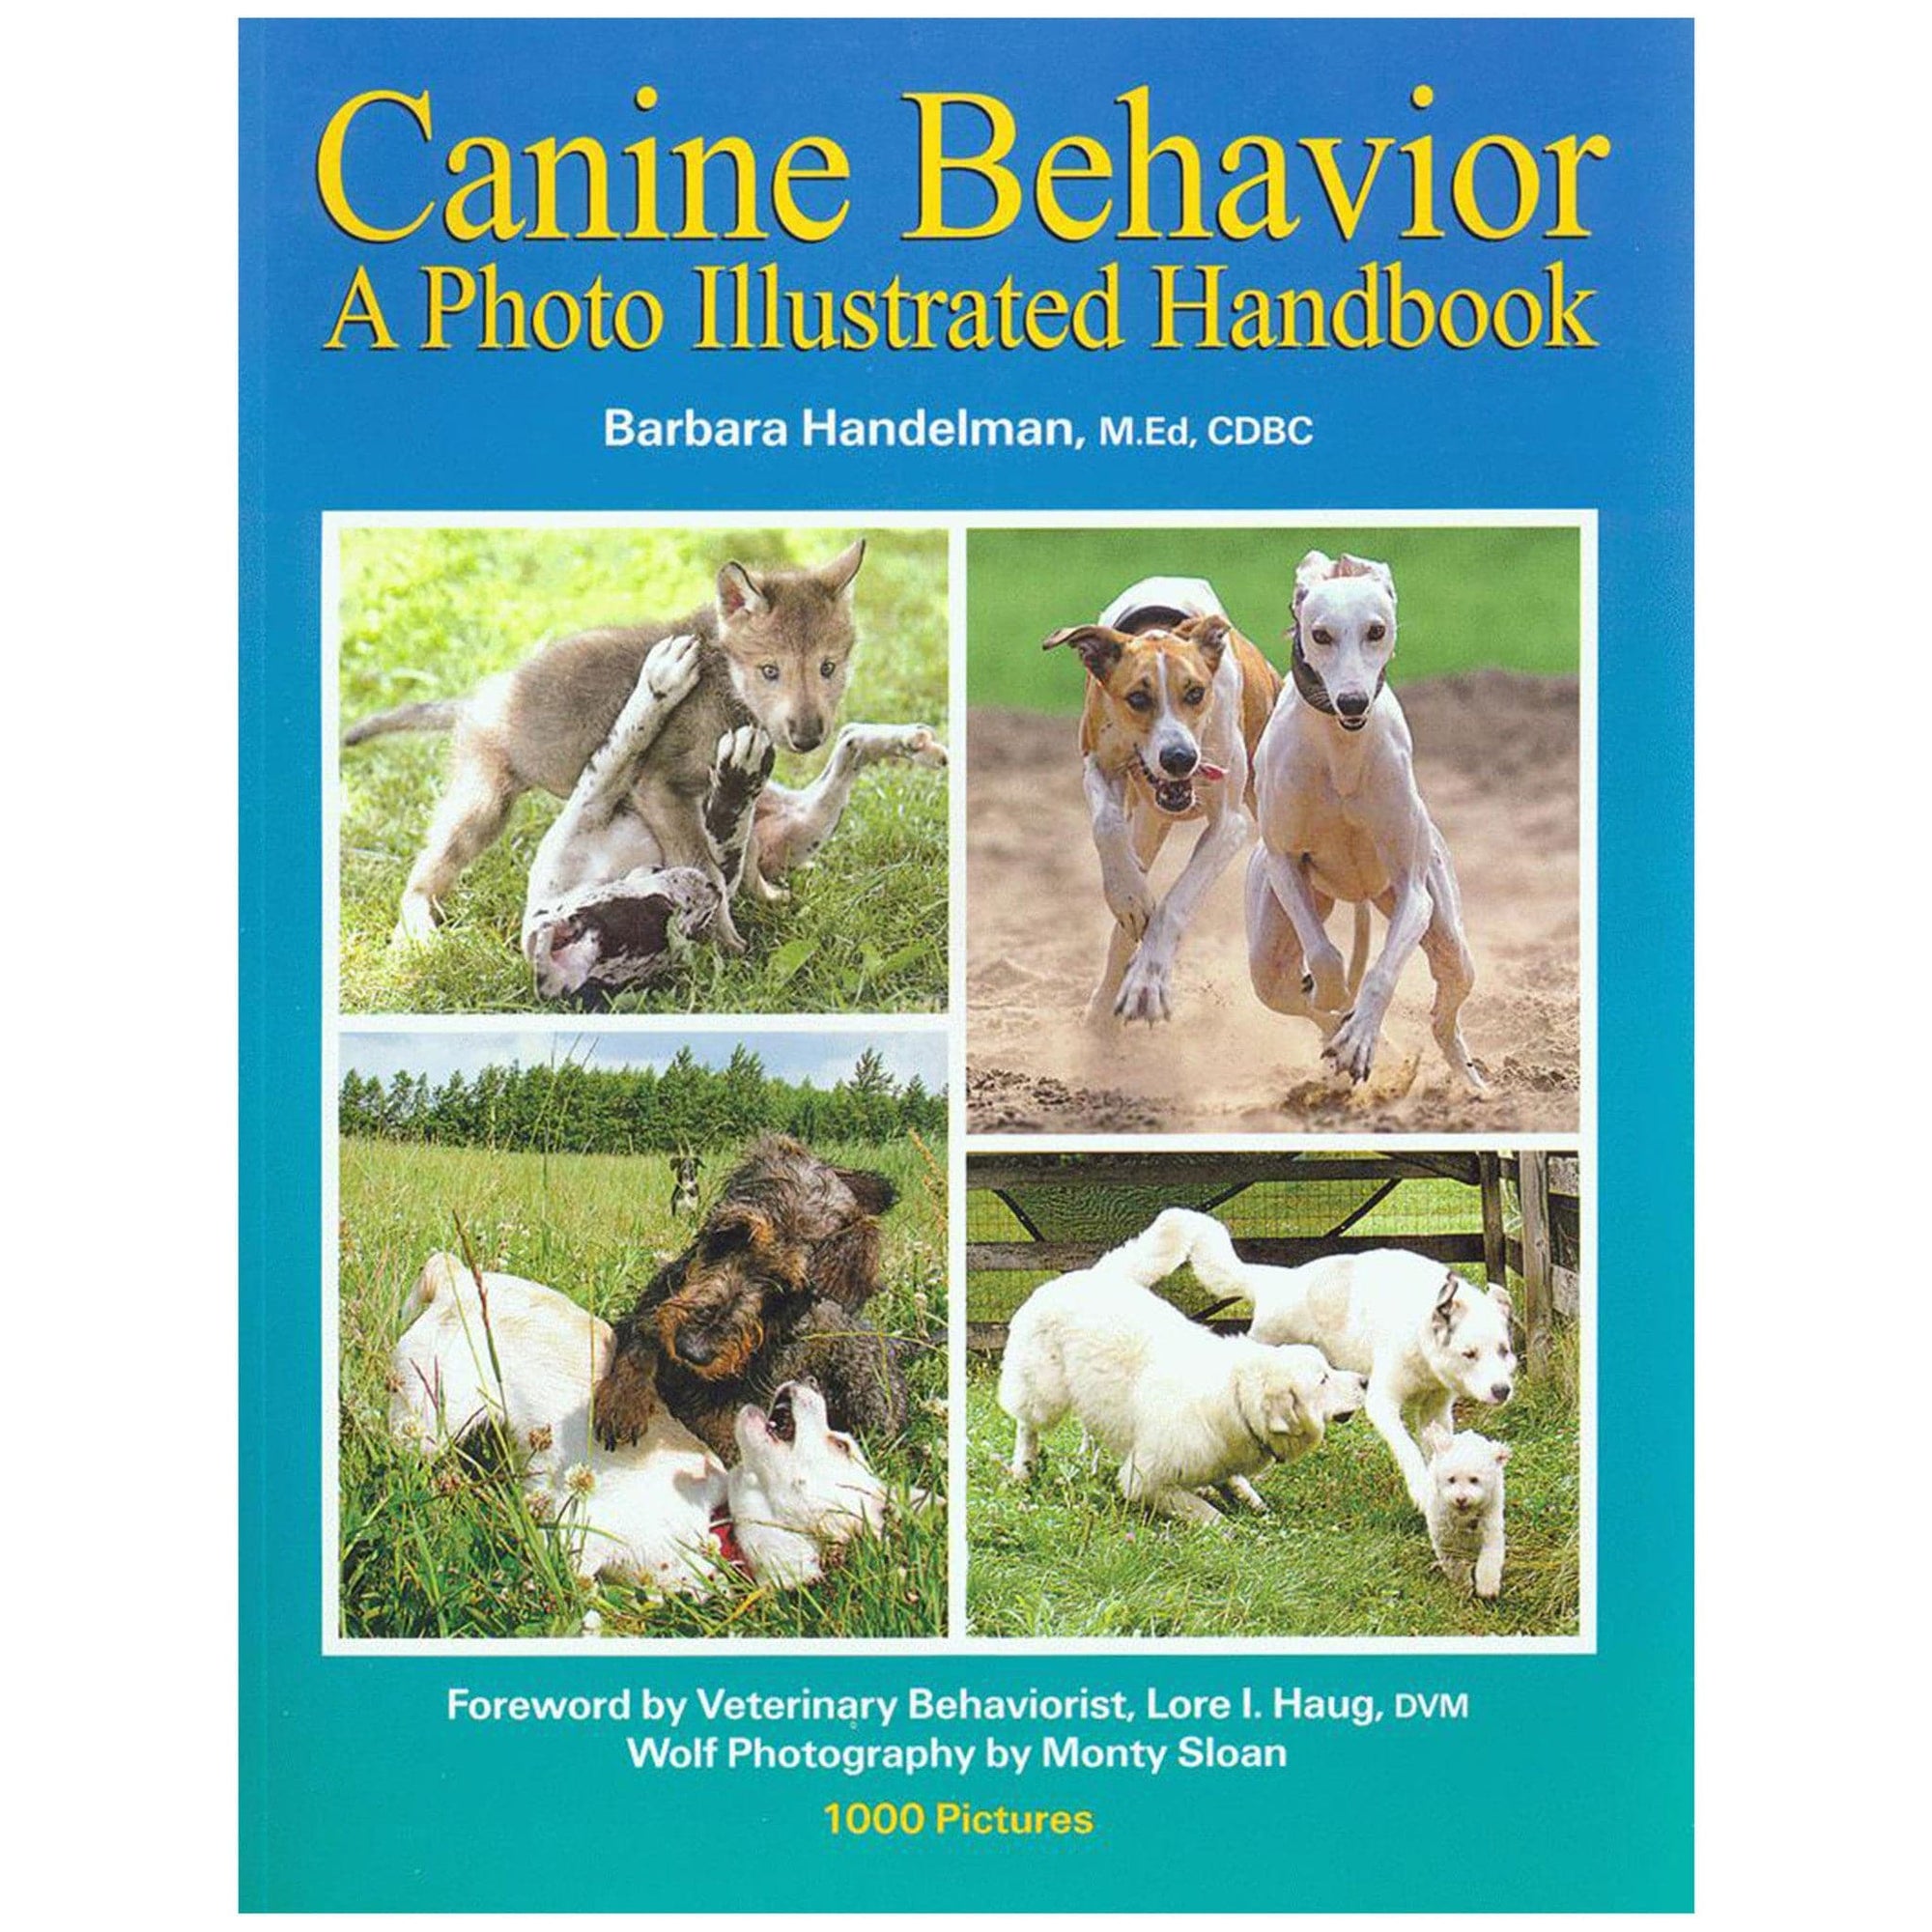 Canine Behavior: A Photo Illustrated Handbook e-book